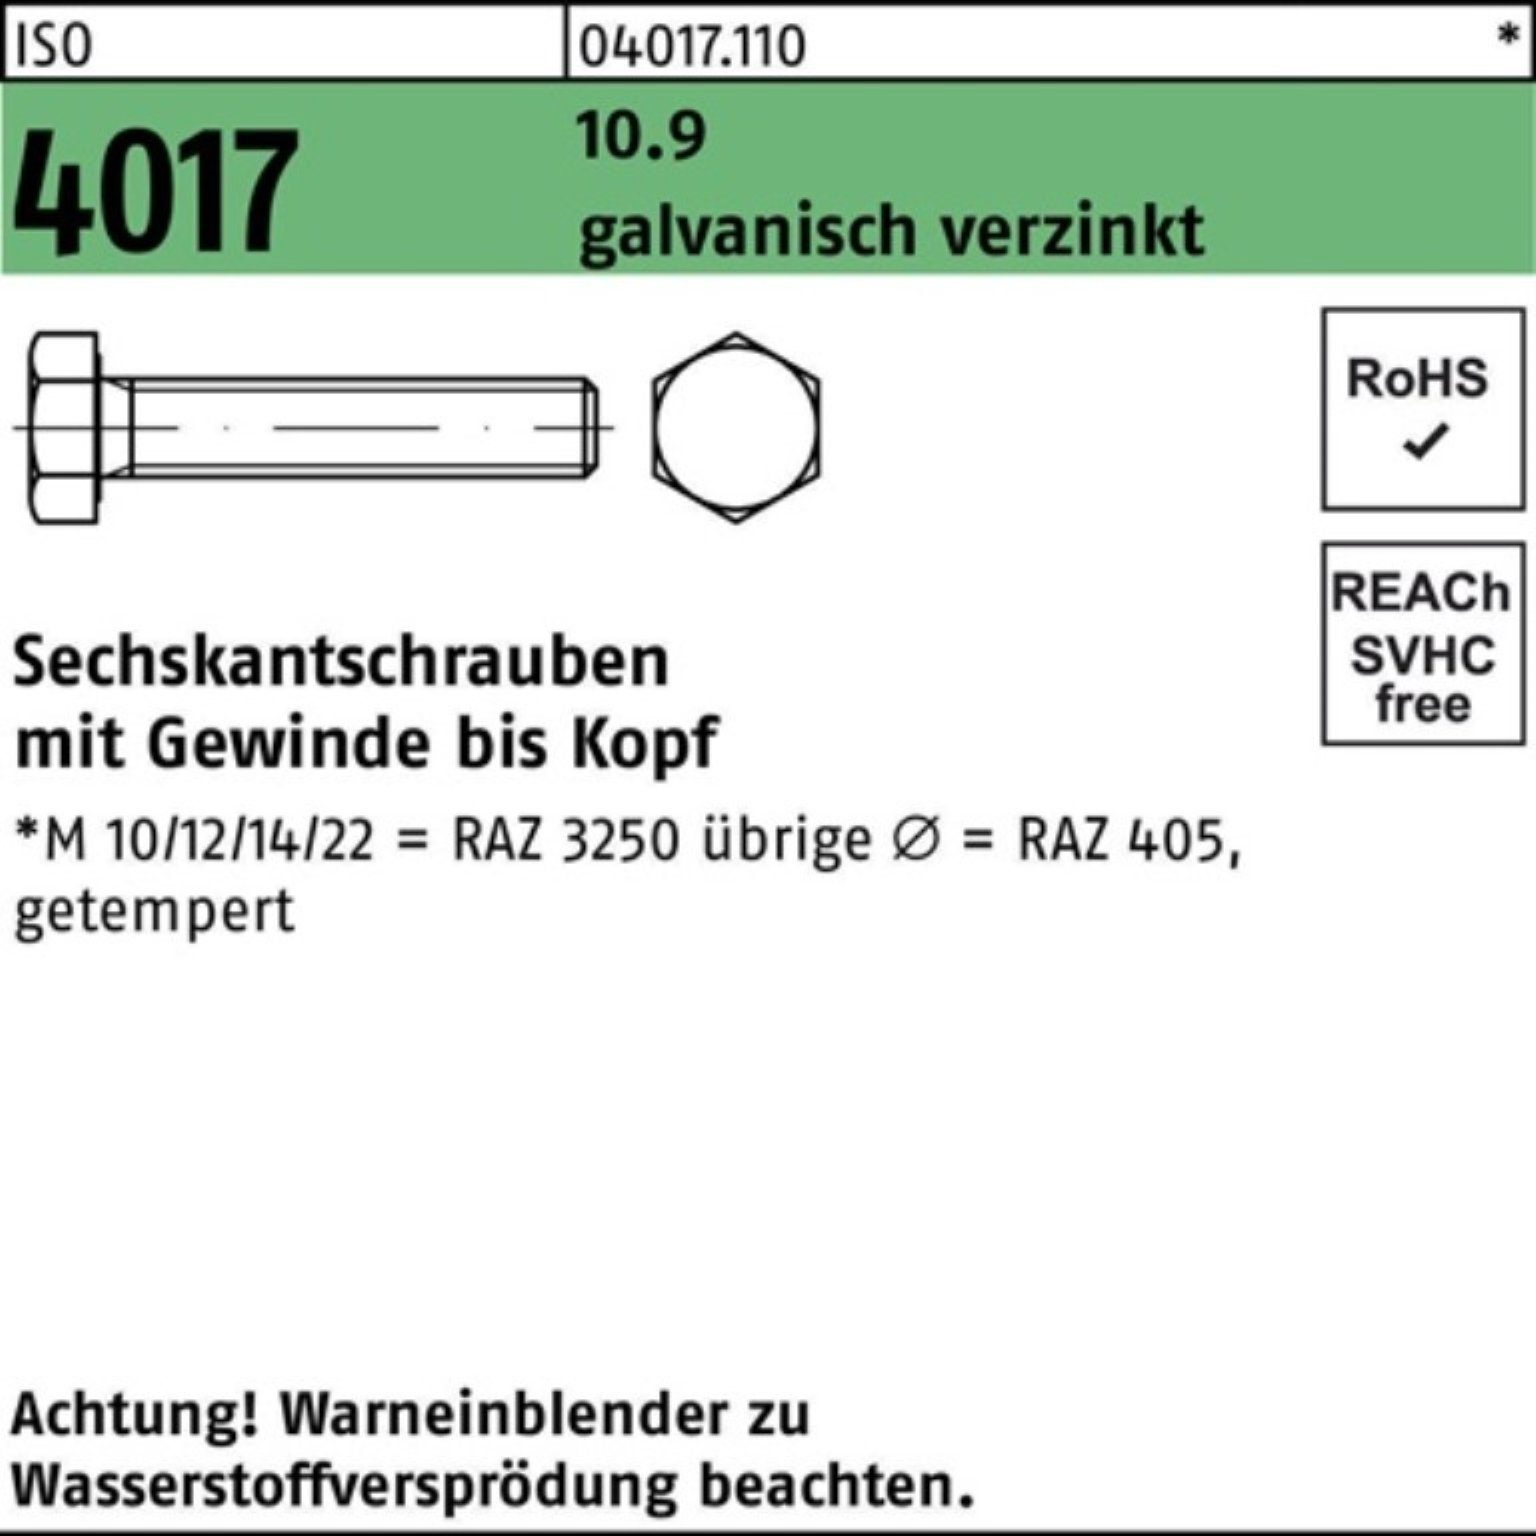 Bufab Sechskantschraube 100er Pack galv.verz. St Sechskantschraube 4017 ISO 10.9 VG 220 M20x 1